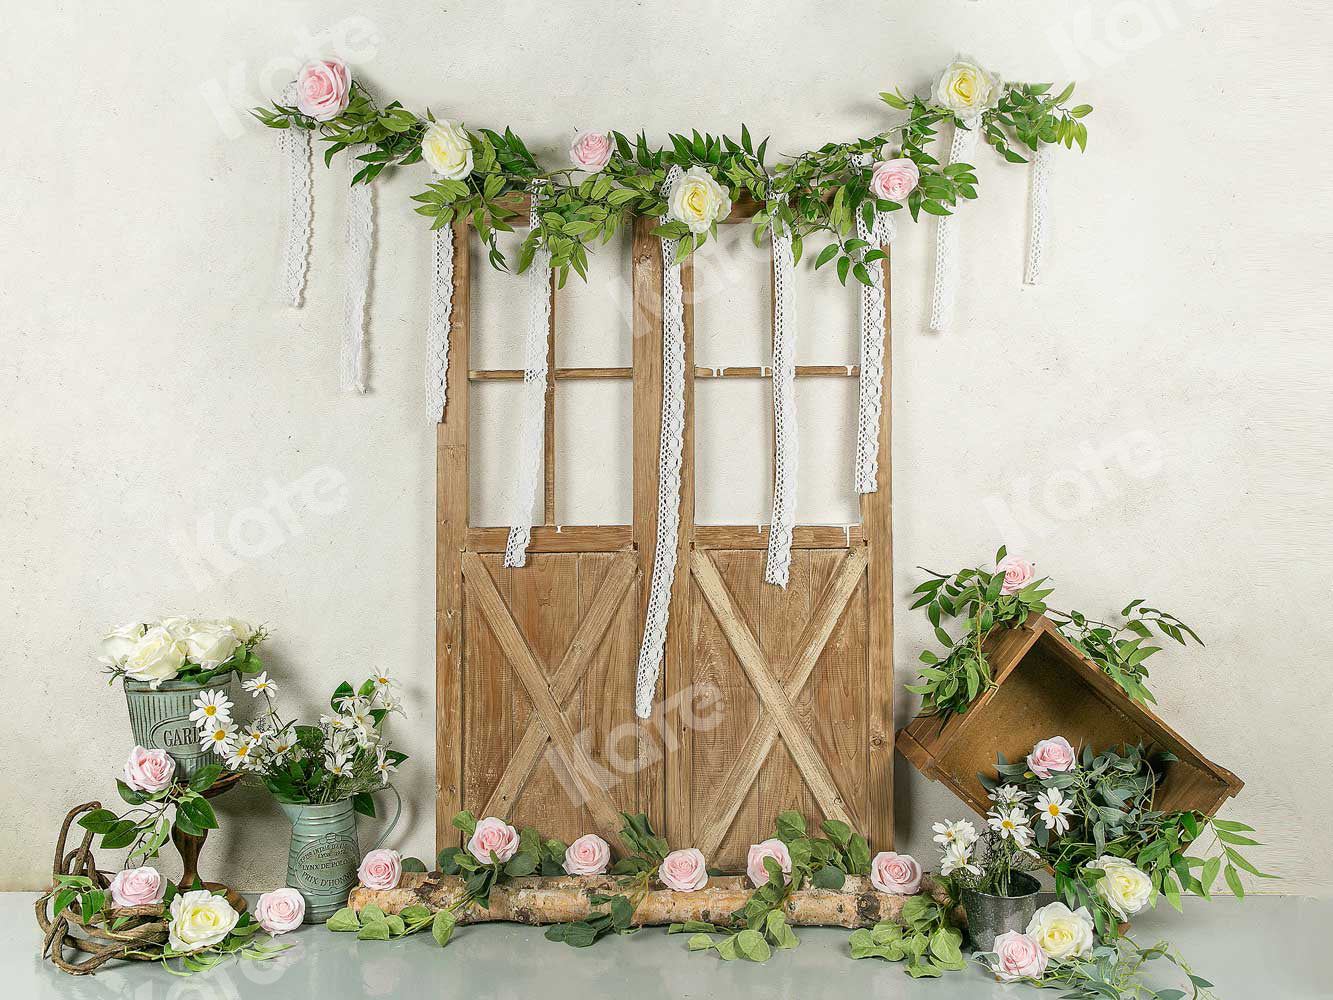 Kate 花の木製のドアの子供の背景によって設計されたコレクション:Jia Chan